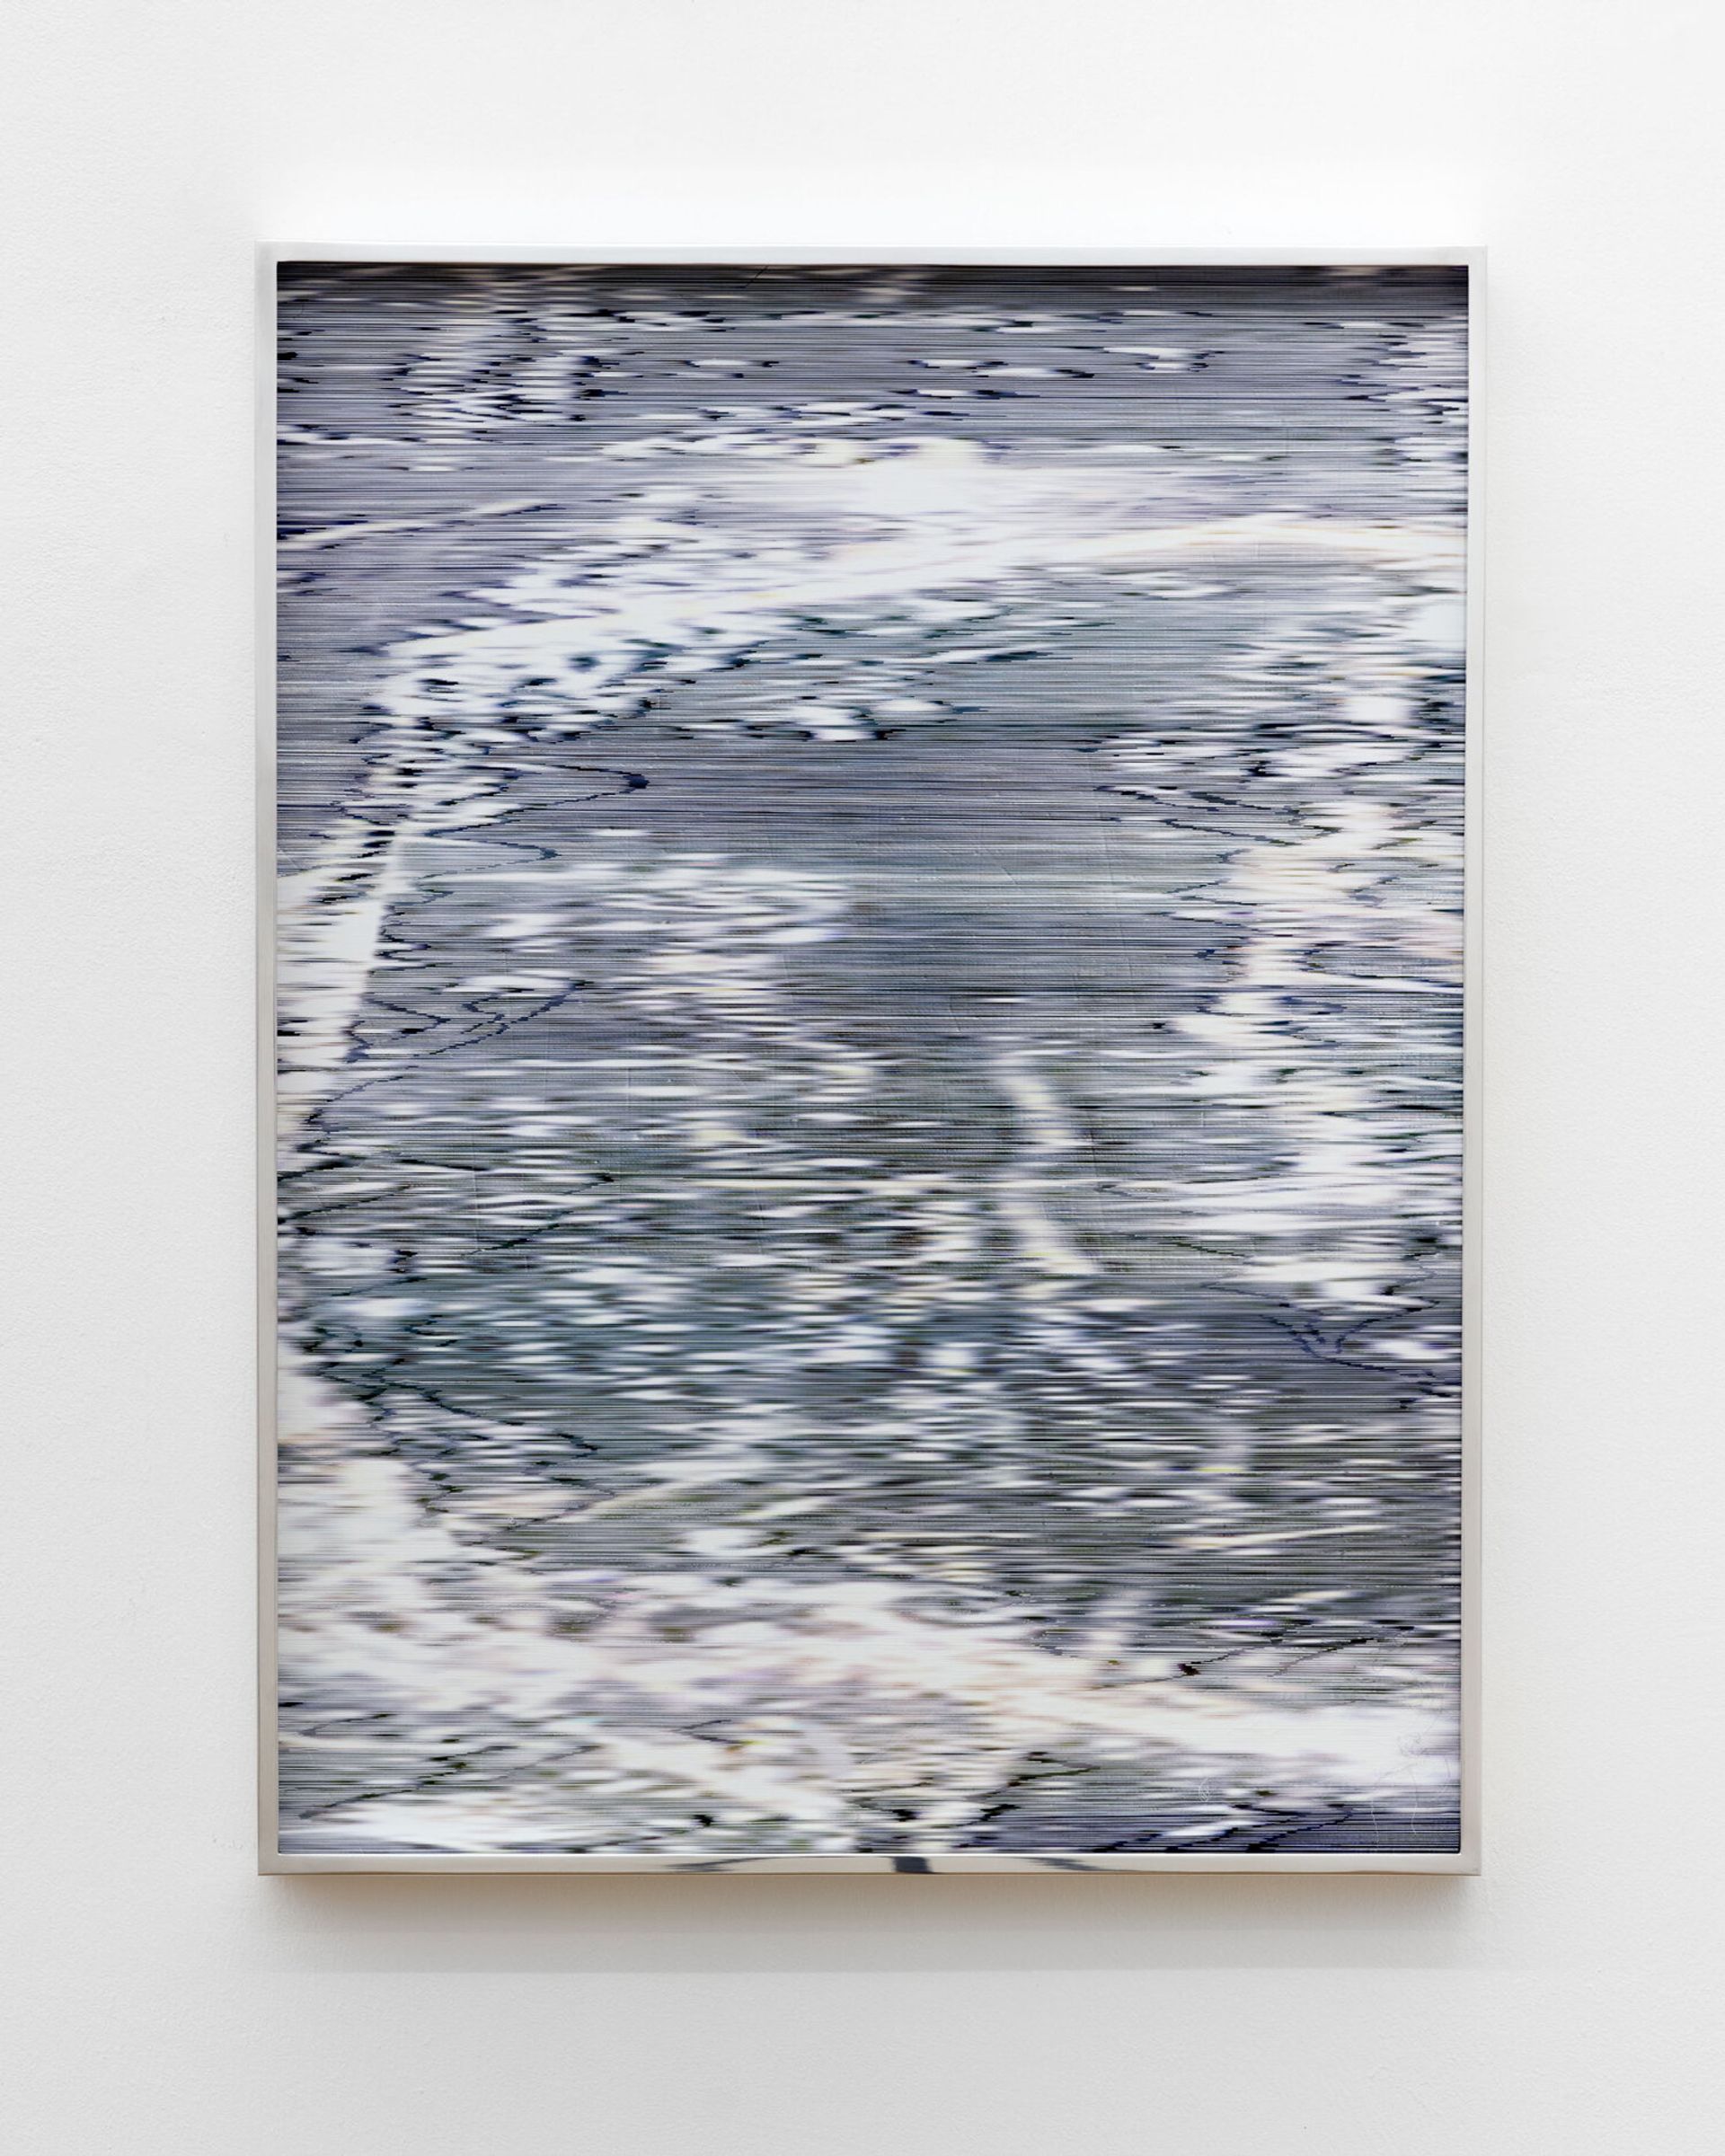 Anna Vogel, Electric Mountains IV, 2019
pigment print, scratched, framed in polished chrome, artglass
60 × 45 cm
unique 

Photo: Sebastian Kissel